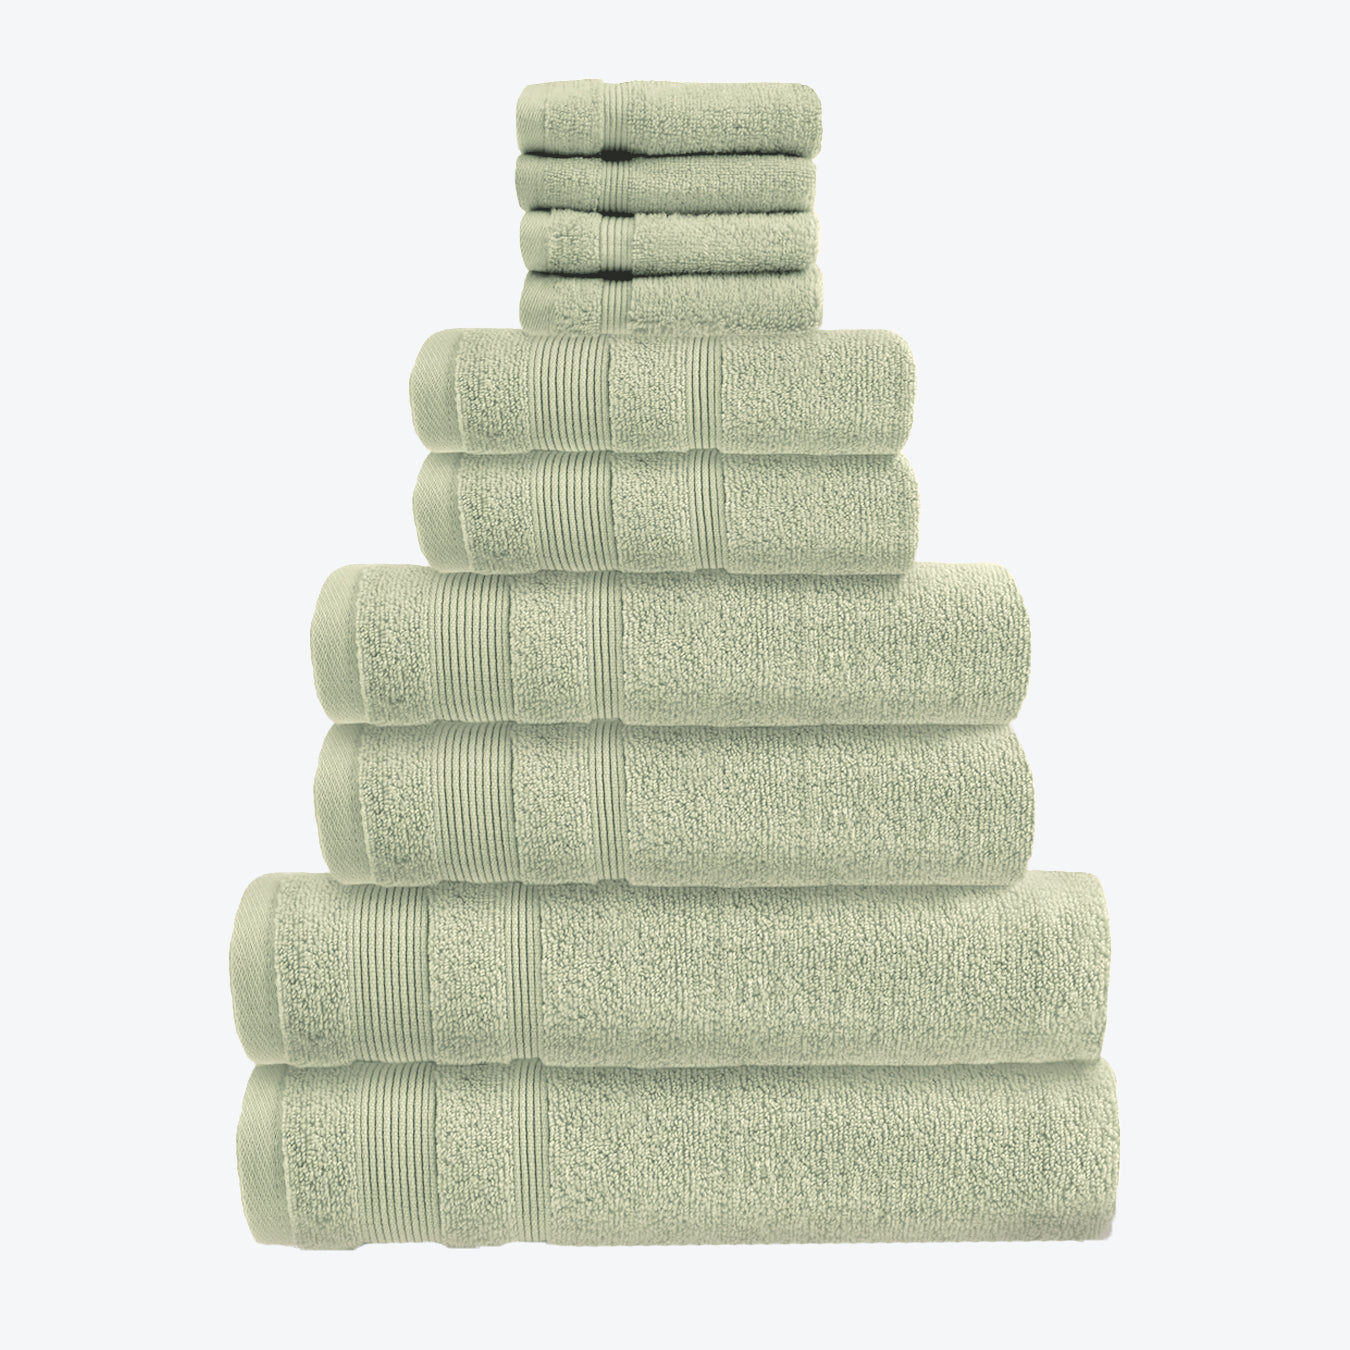 Sage Green Zero Twist 10pc Towel Set Egyptian Cotton Bathroom Towel Bale. Hand Towels, Bath Towels, Bath Sheets, and Face Cloths